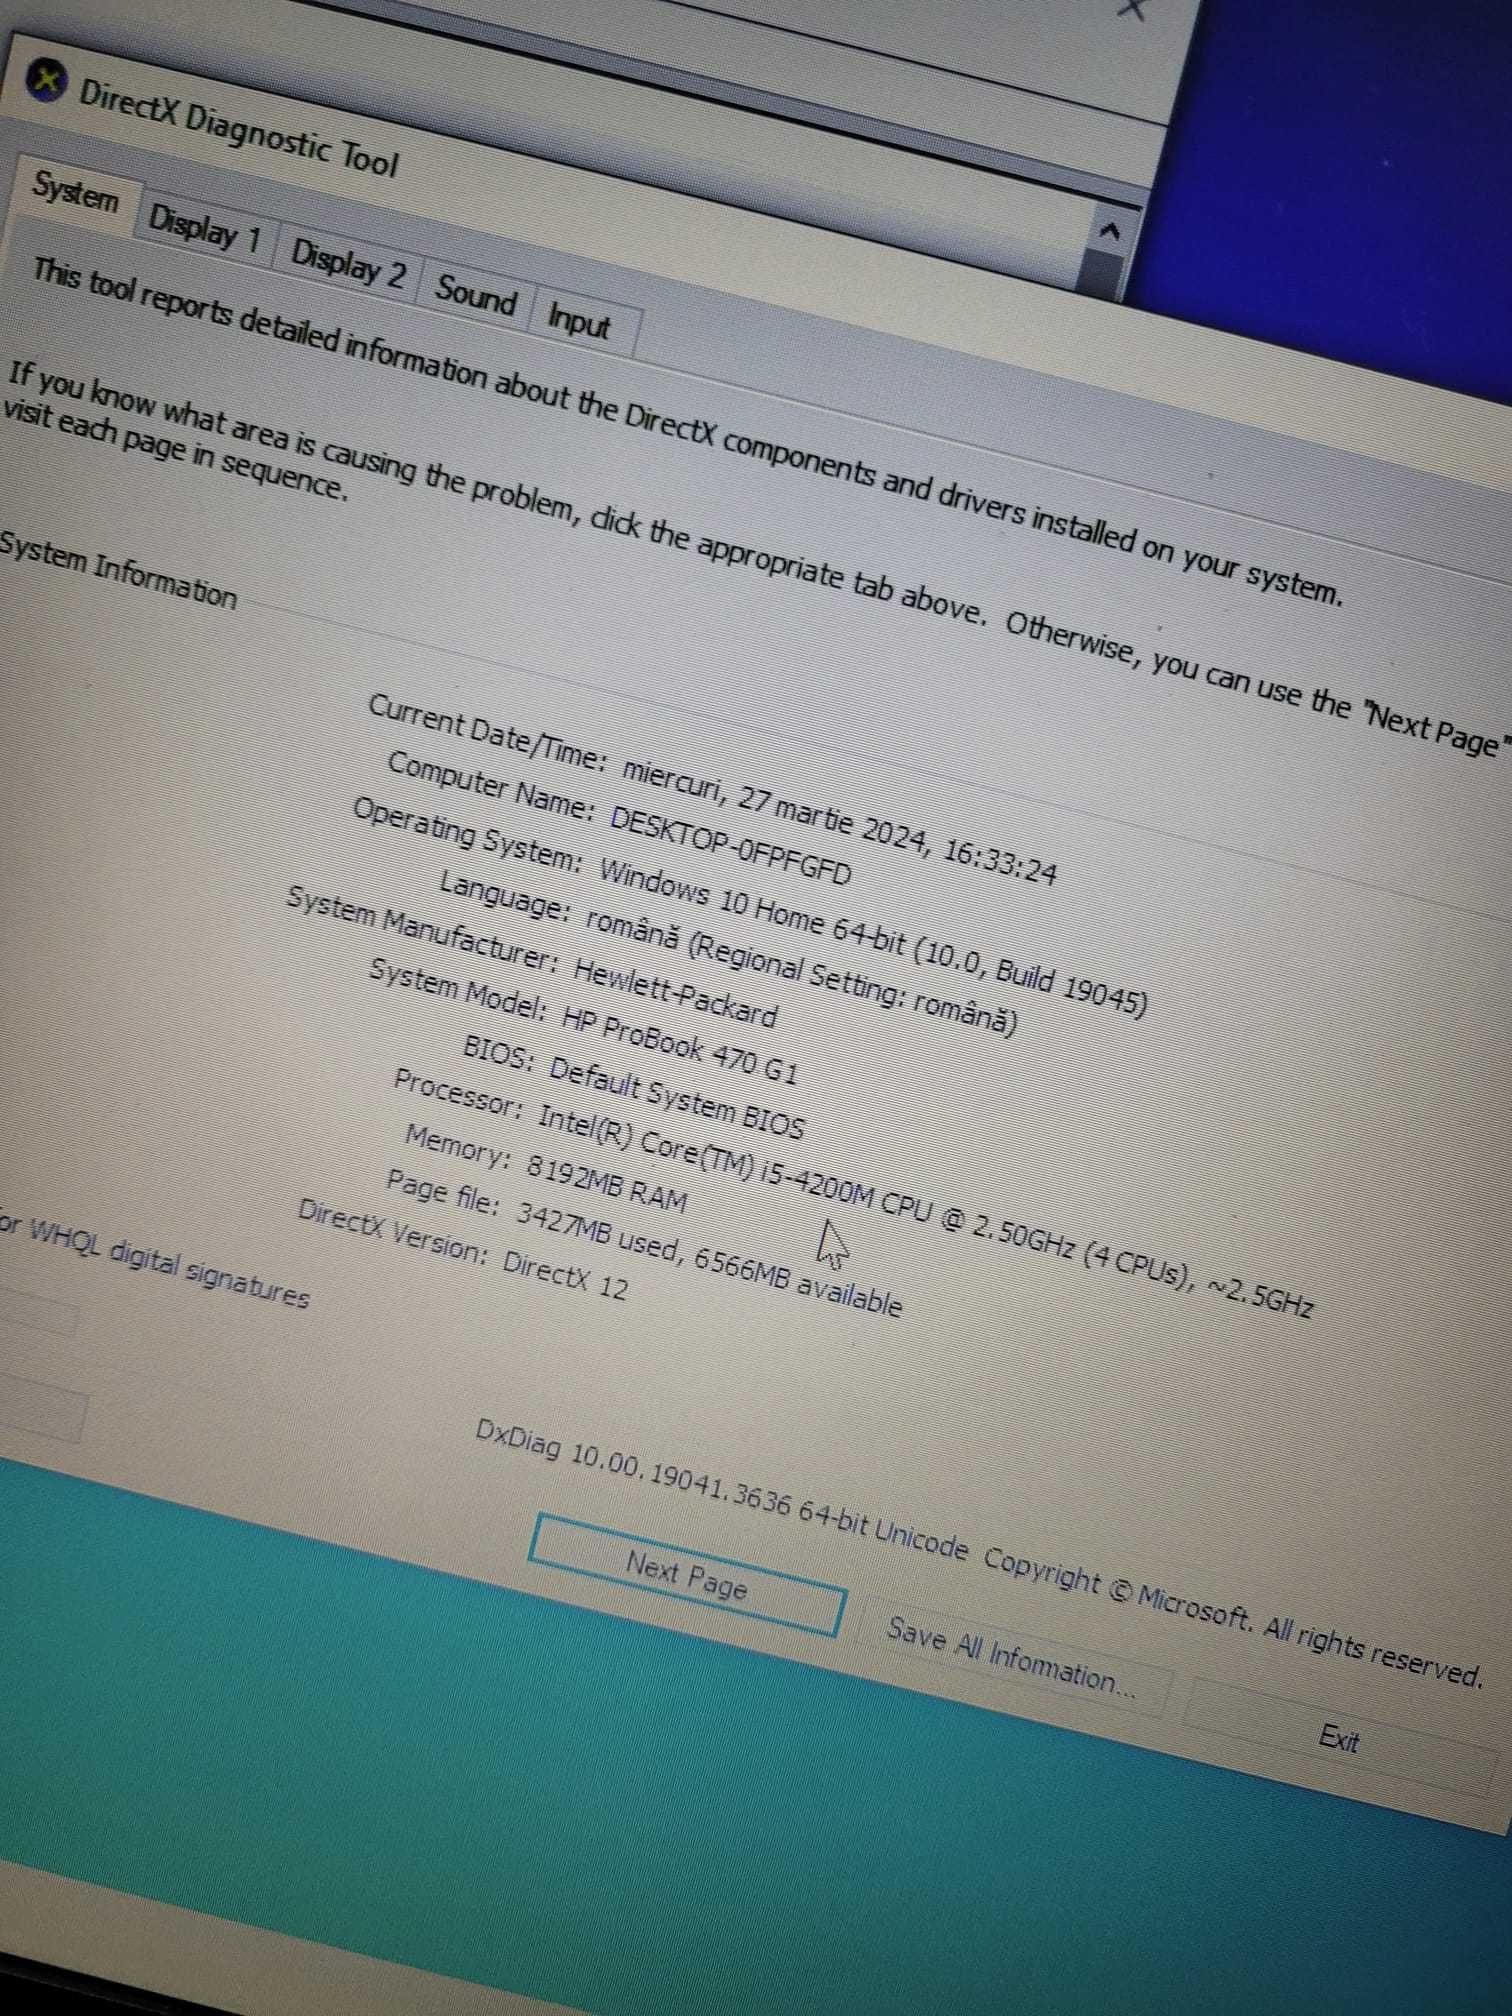 Laptop HP ProBook 470 G1 intel i5 8gb ram AMD Radeon